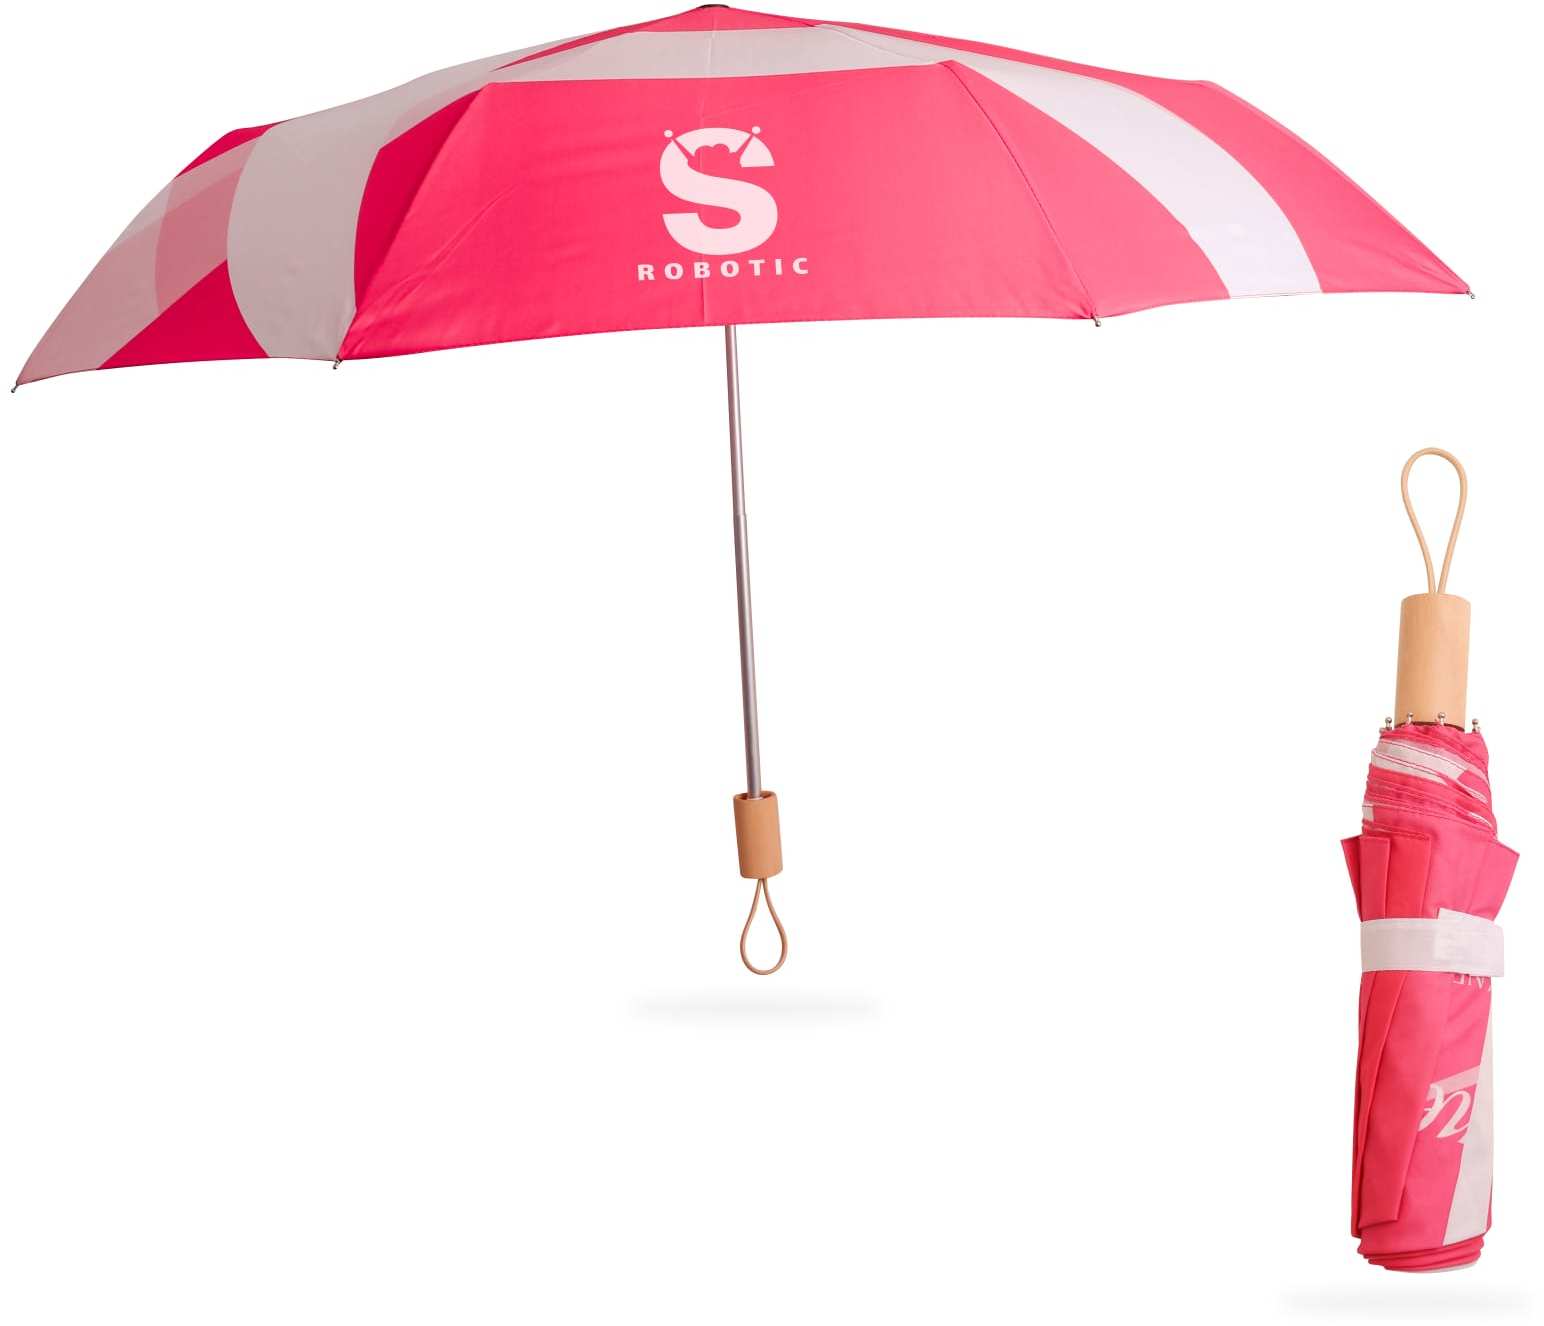 RPET Lightweight Umbrella with Wooden Handle